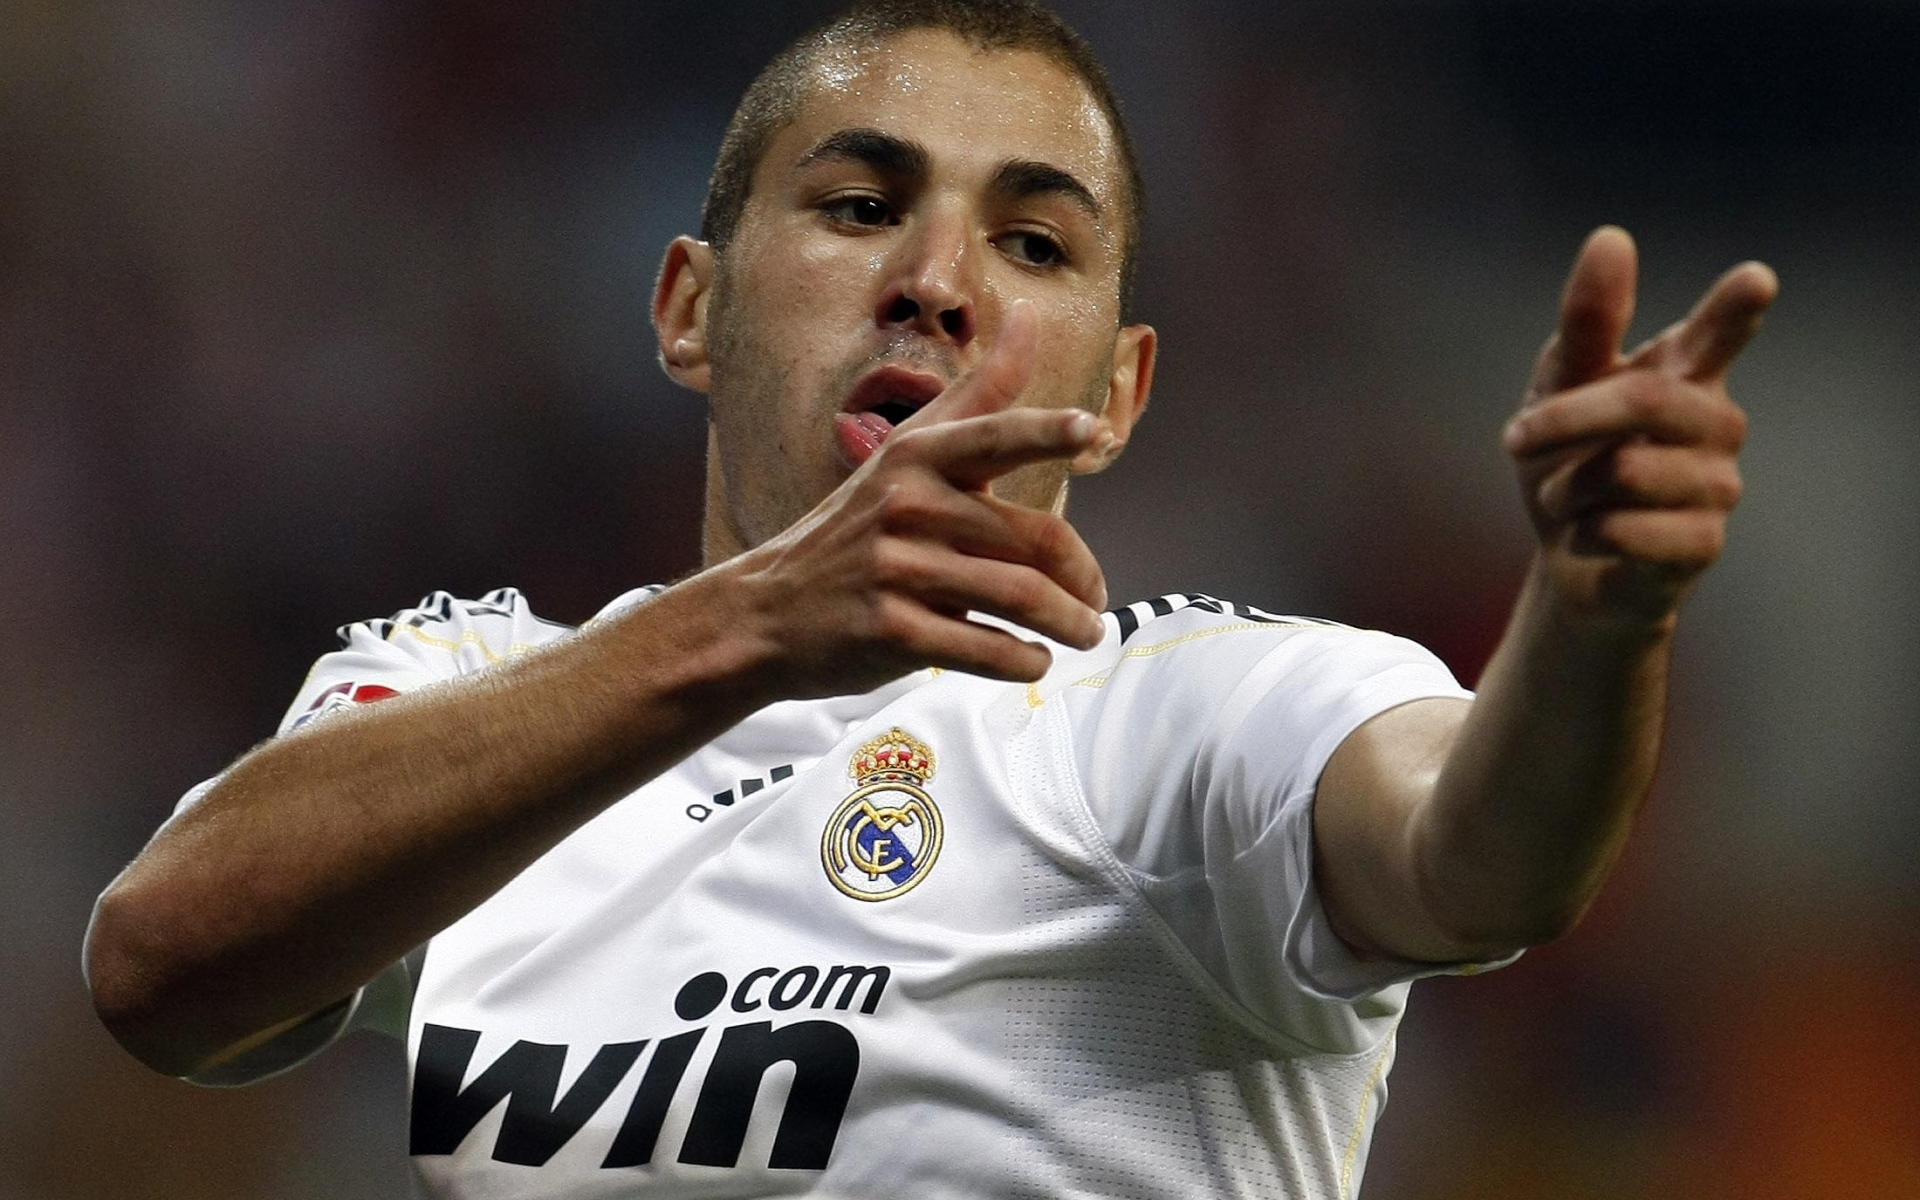 The forward of Real Madrid Karim Benzema closeup